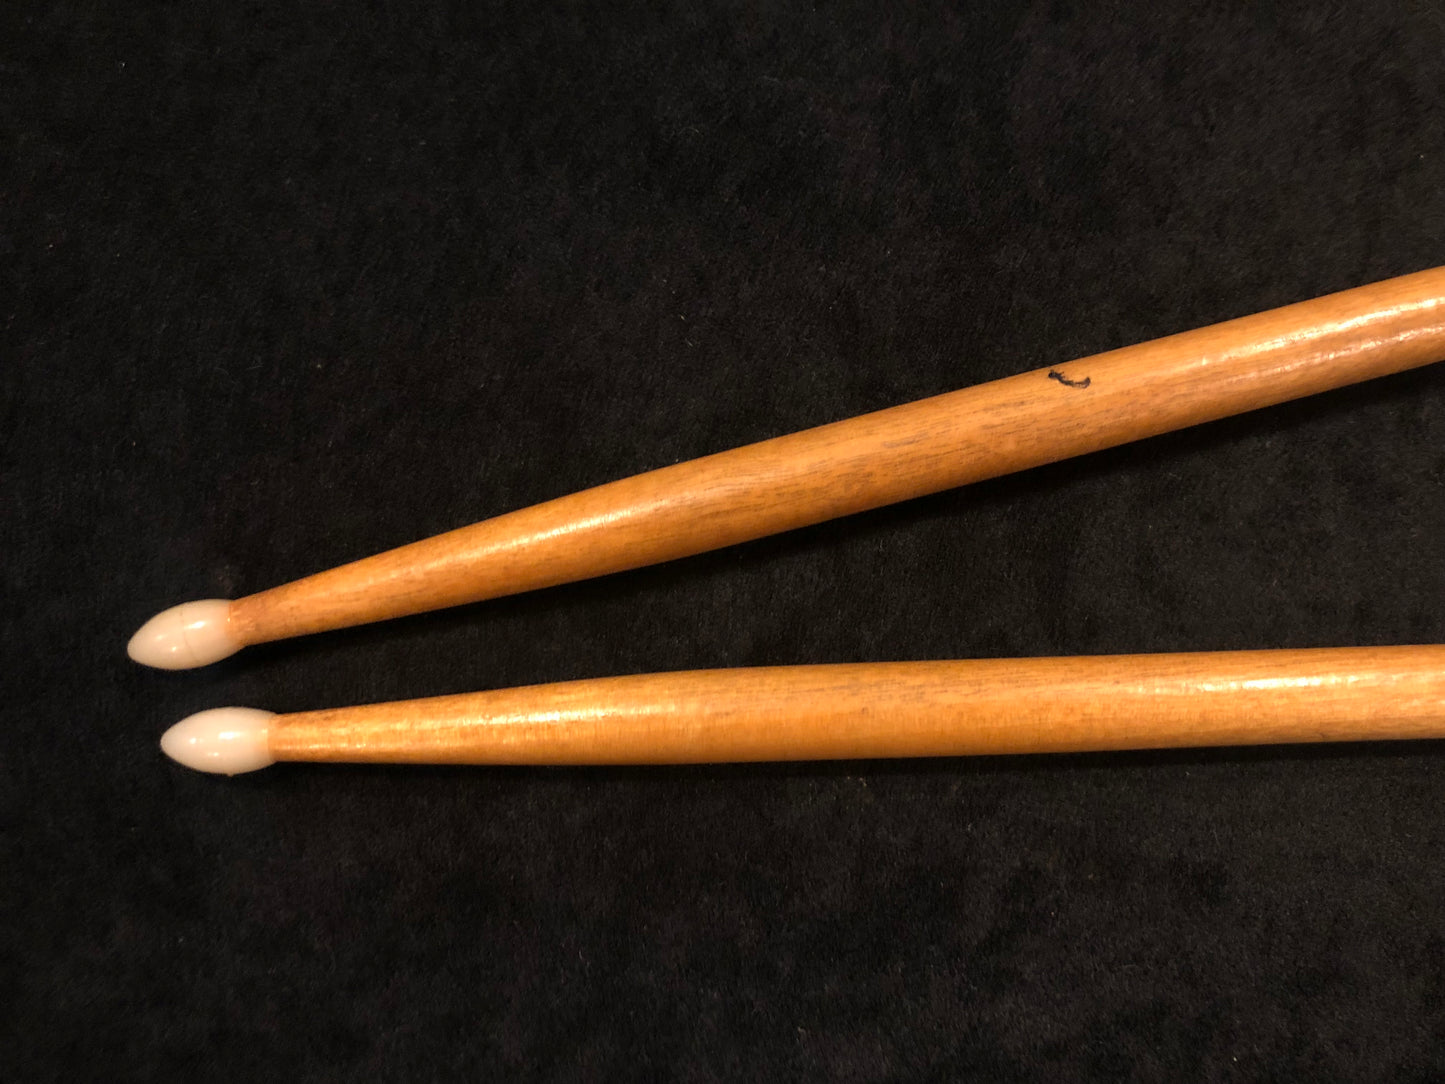 Vintage Rogers Louie Bellson Model 4871 Drum Stick Brushes w/ Original Bag